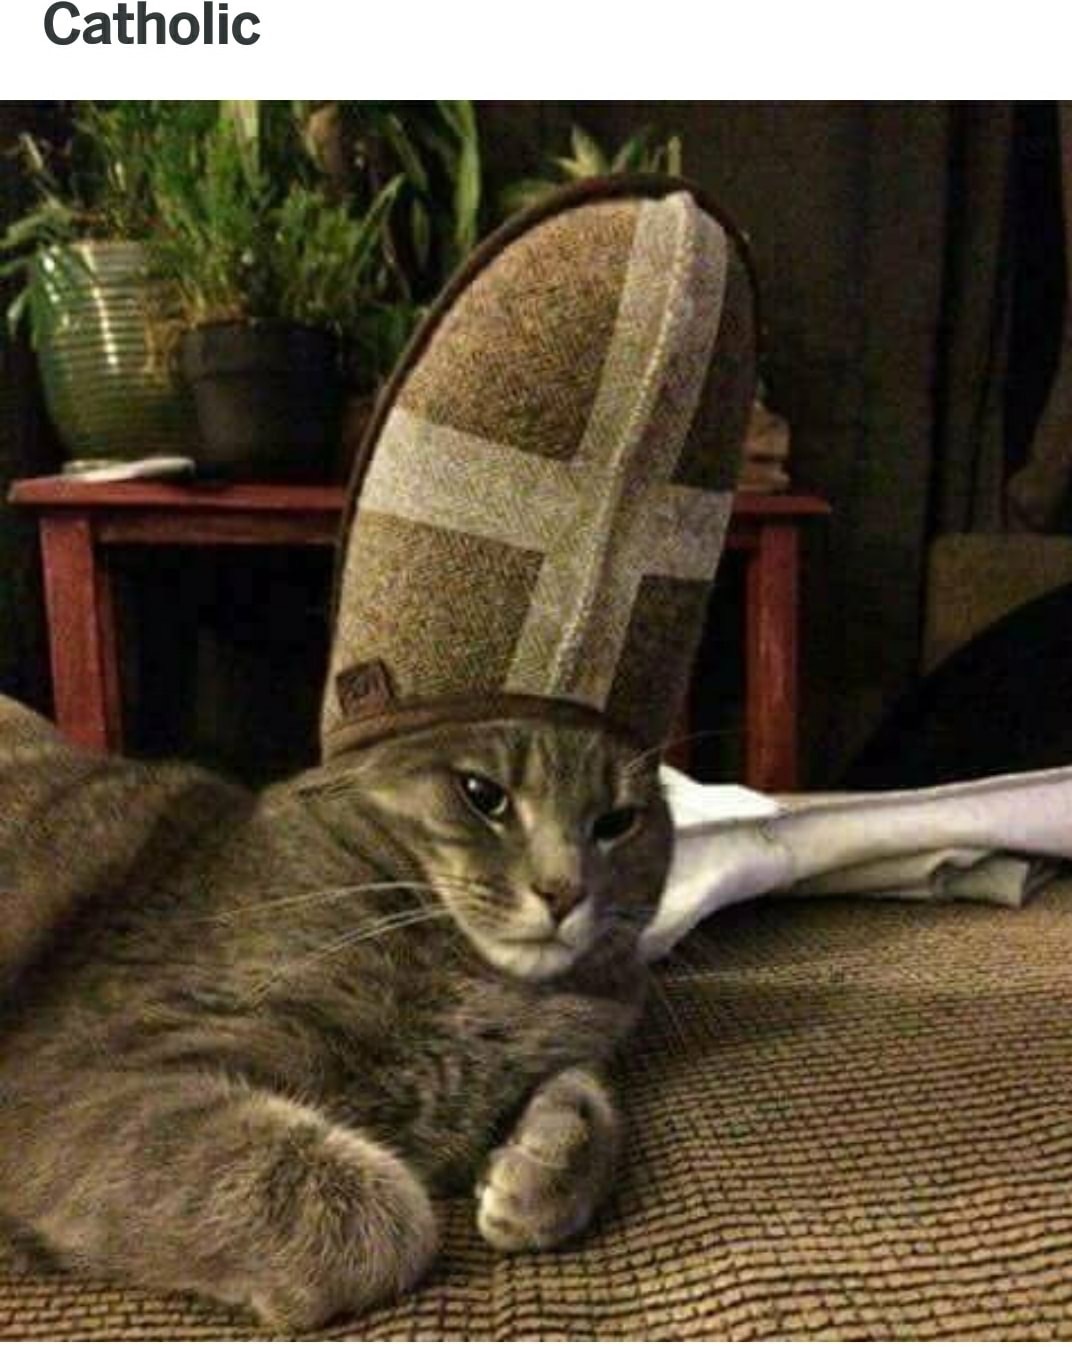 memes - religious cat - Catholic